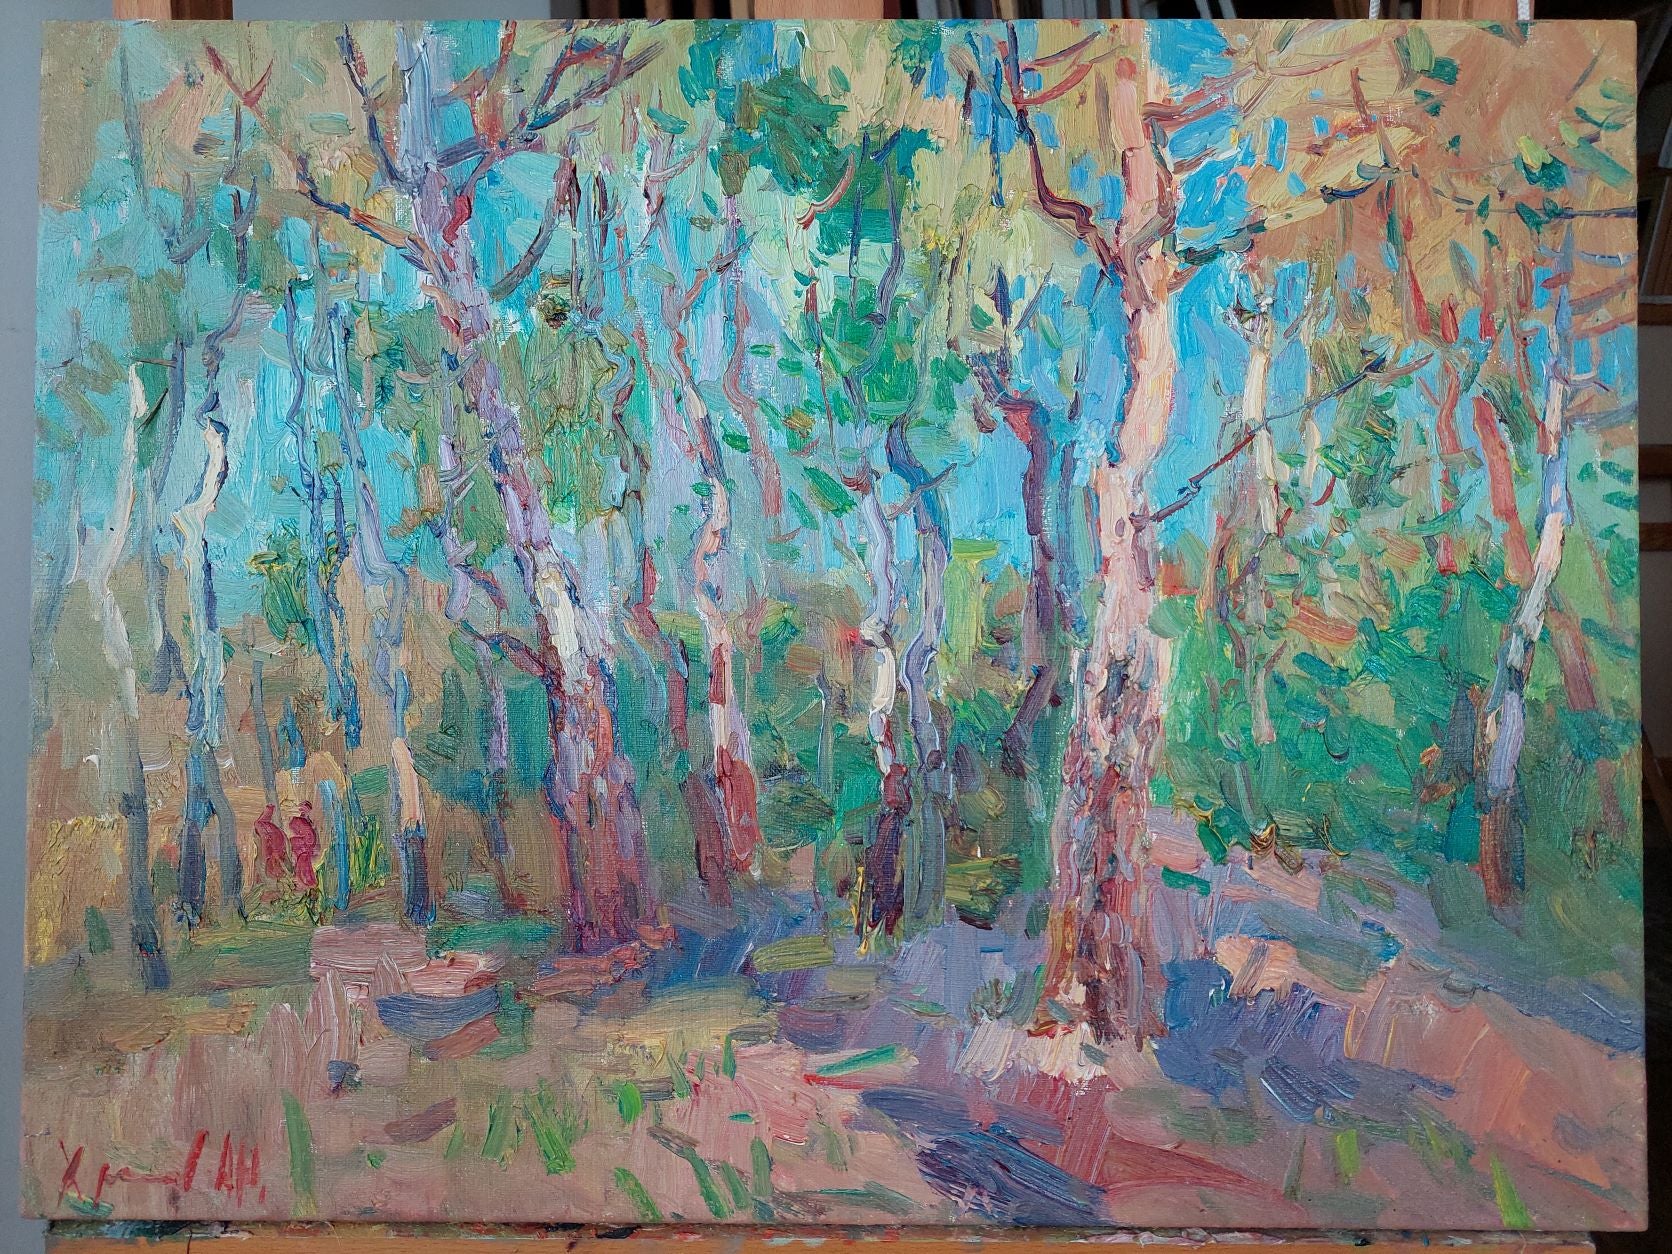 Birch grove (2018) by Oleksandr Khrapachov